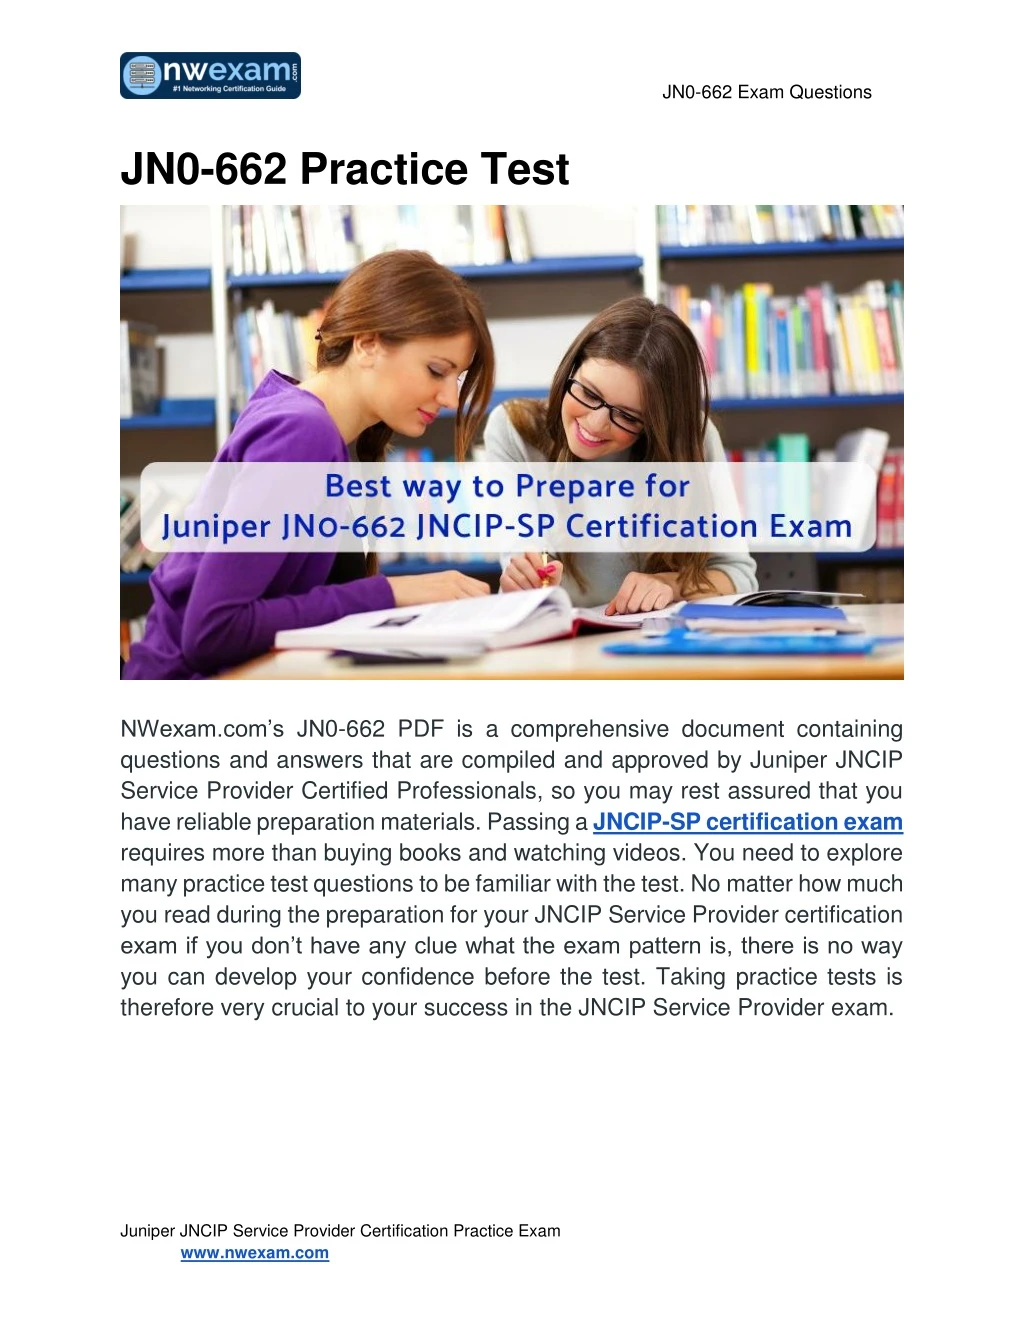 jn0 662 exam questions